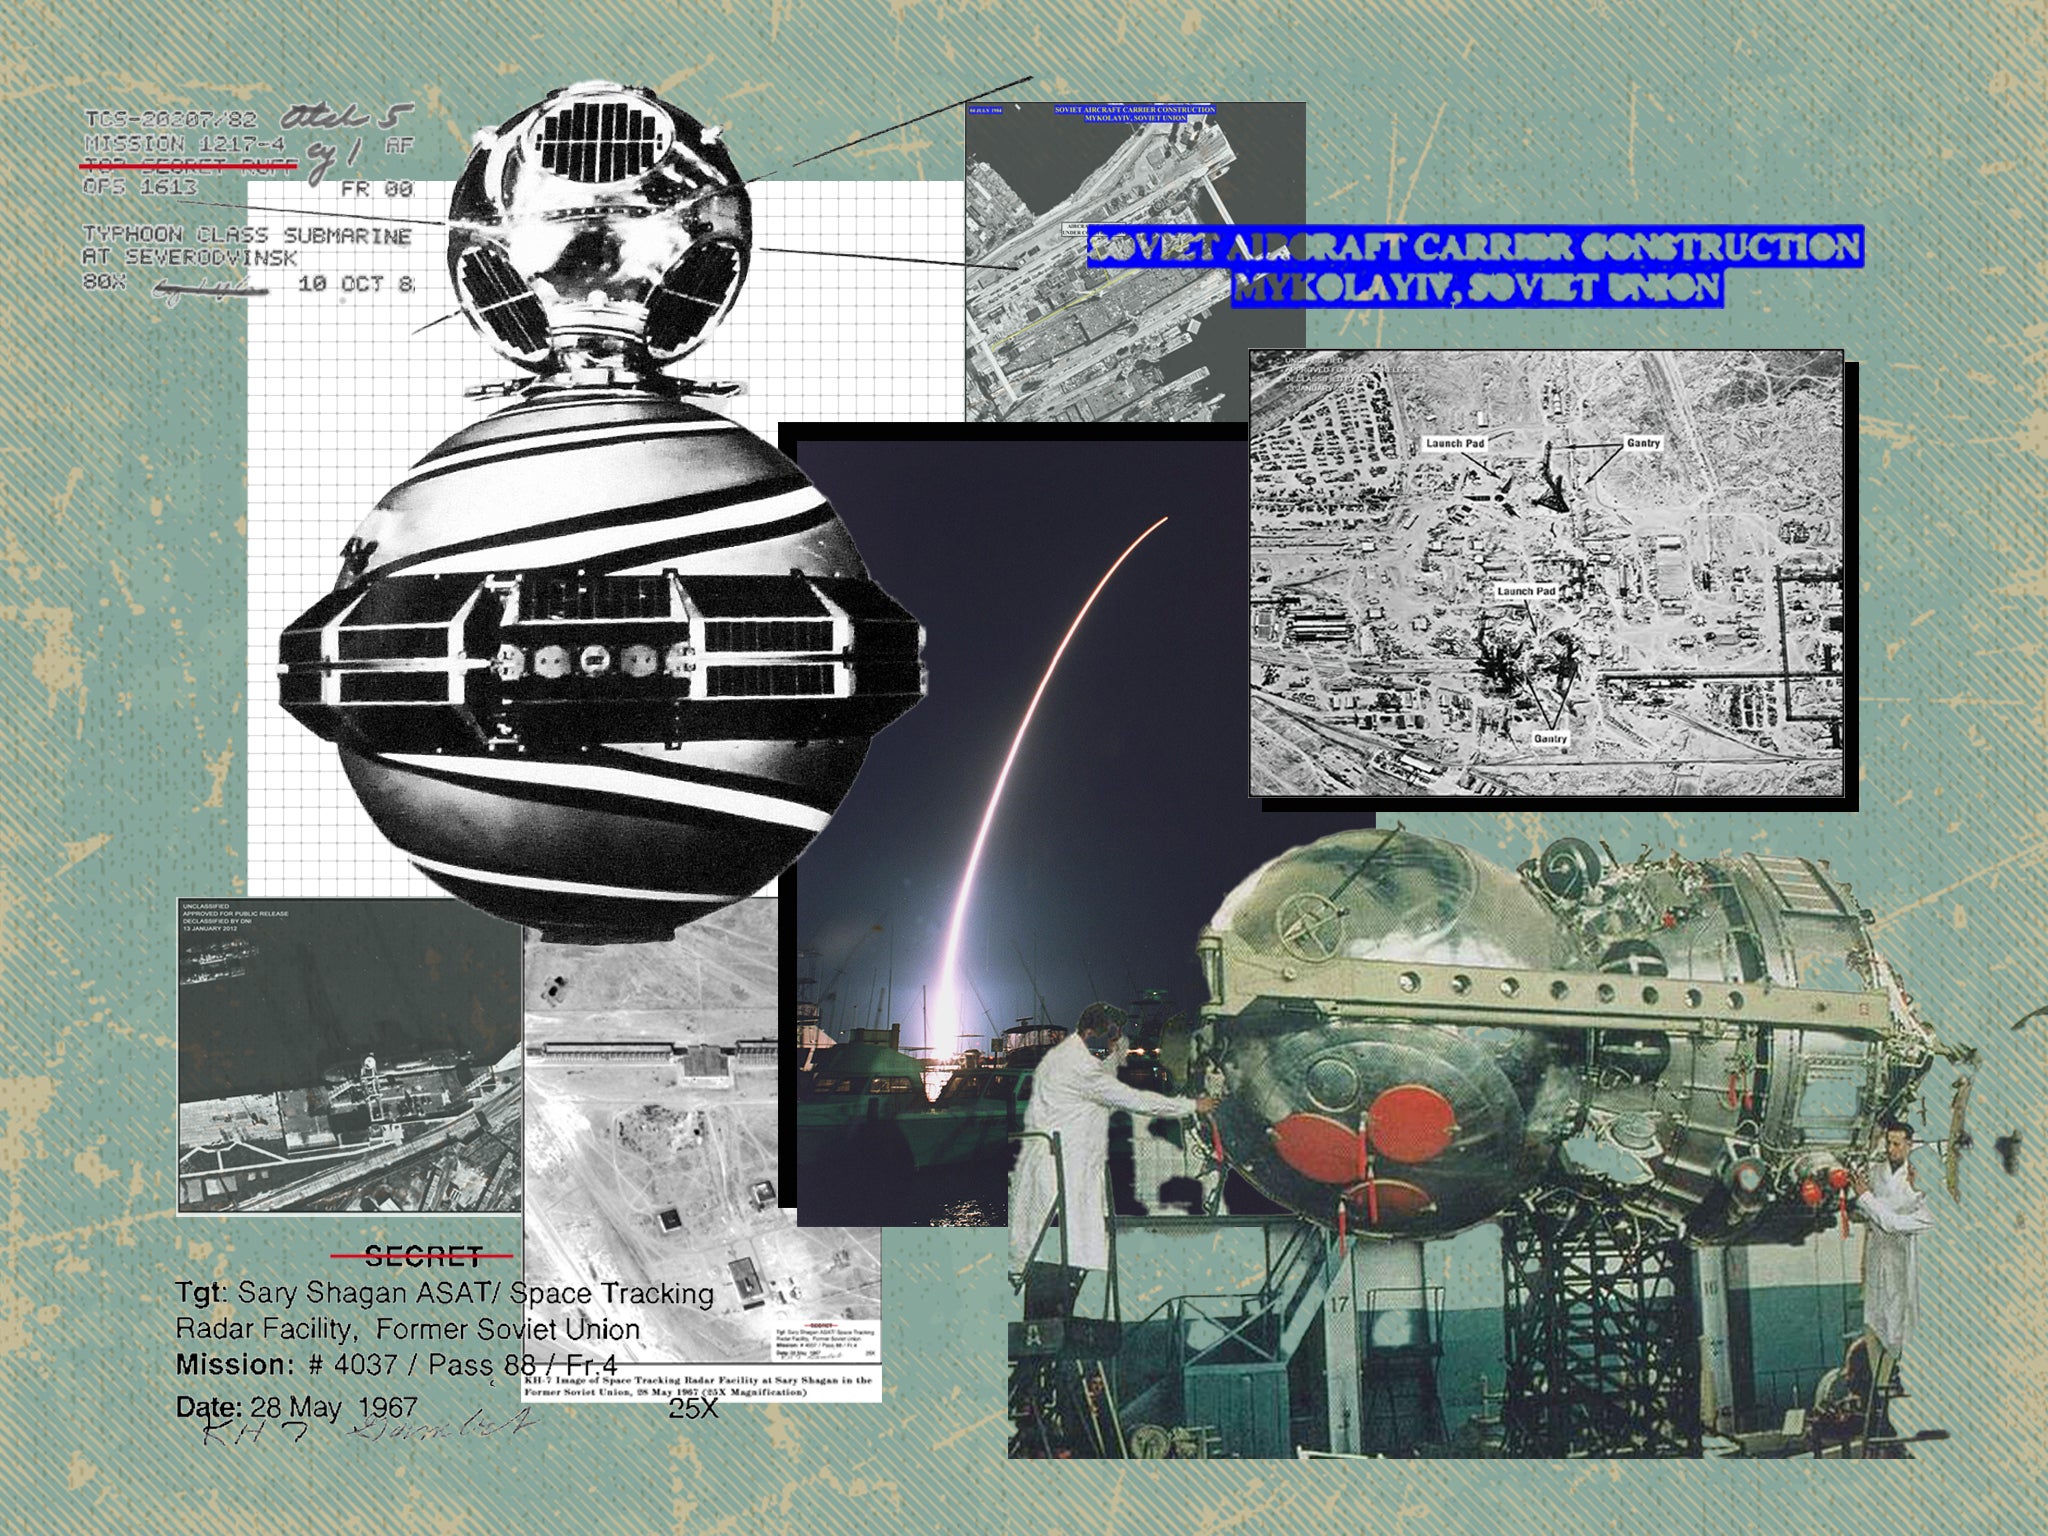 Spy satellites became a key battleground in the Cold War